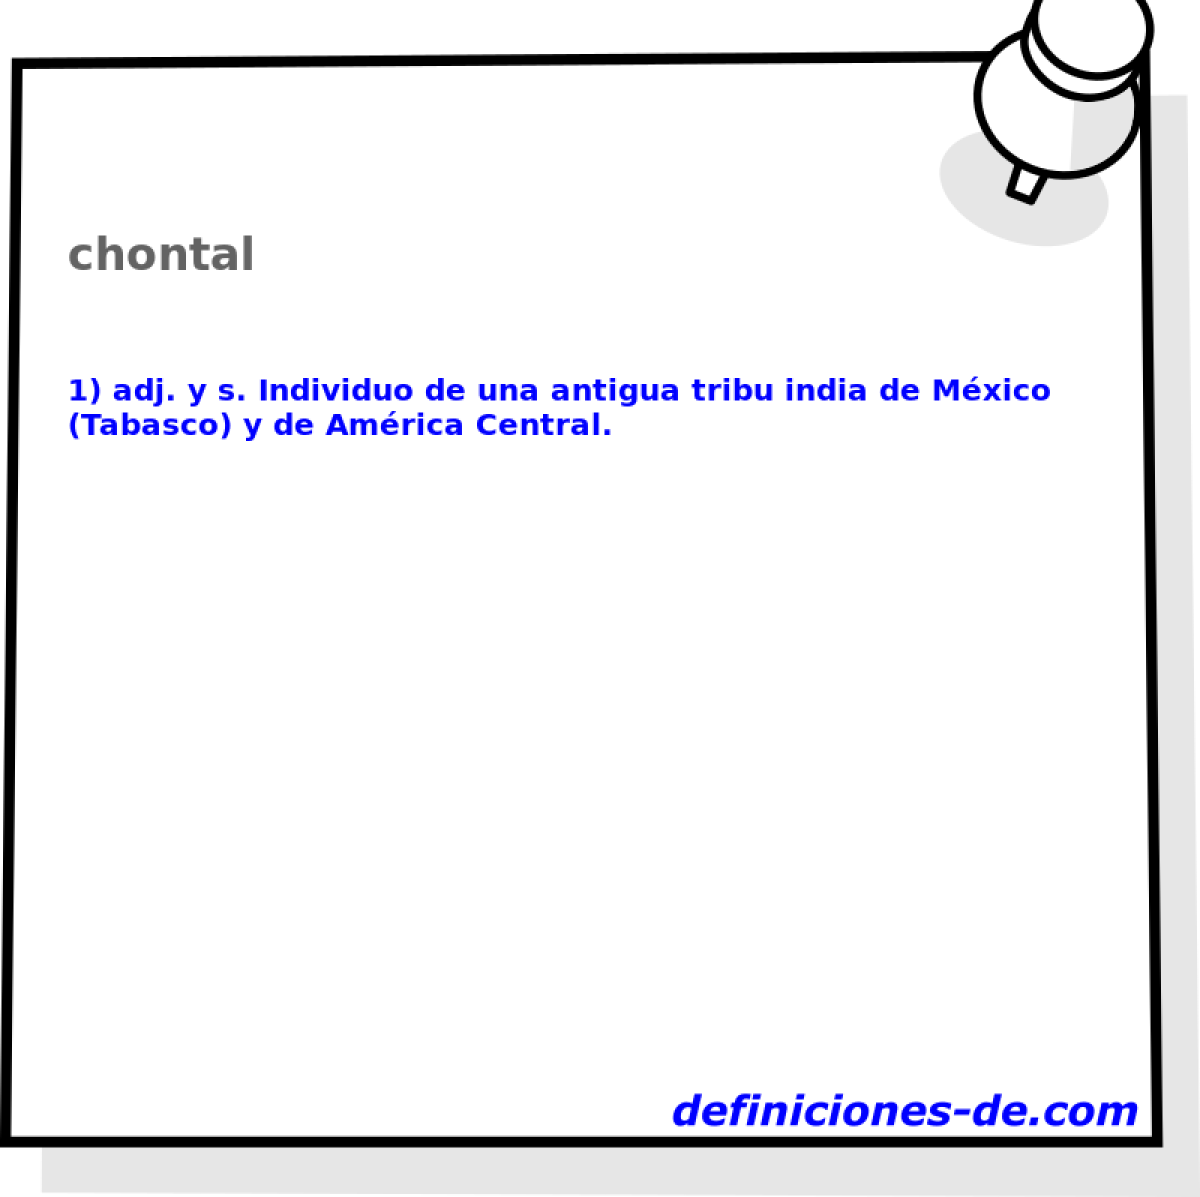 chontal 